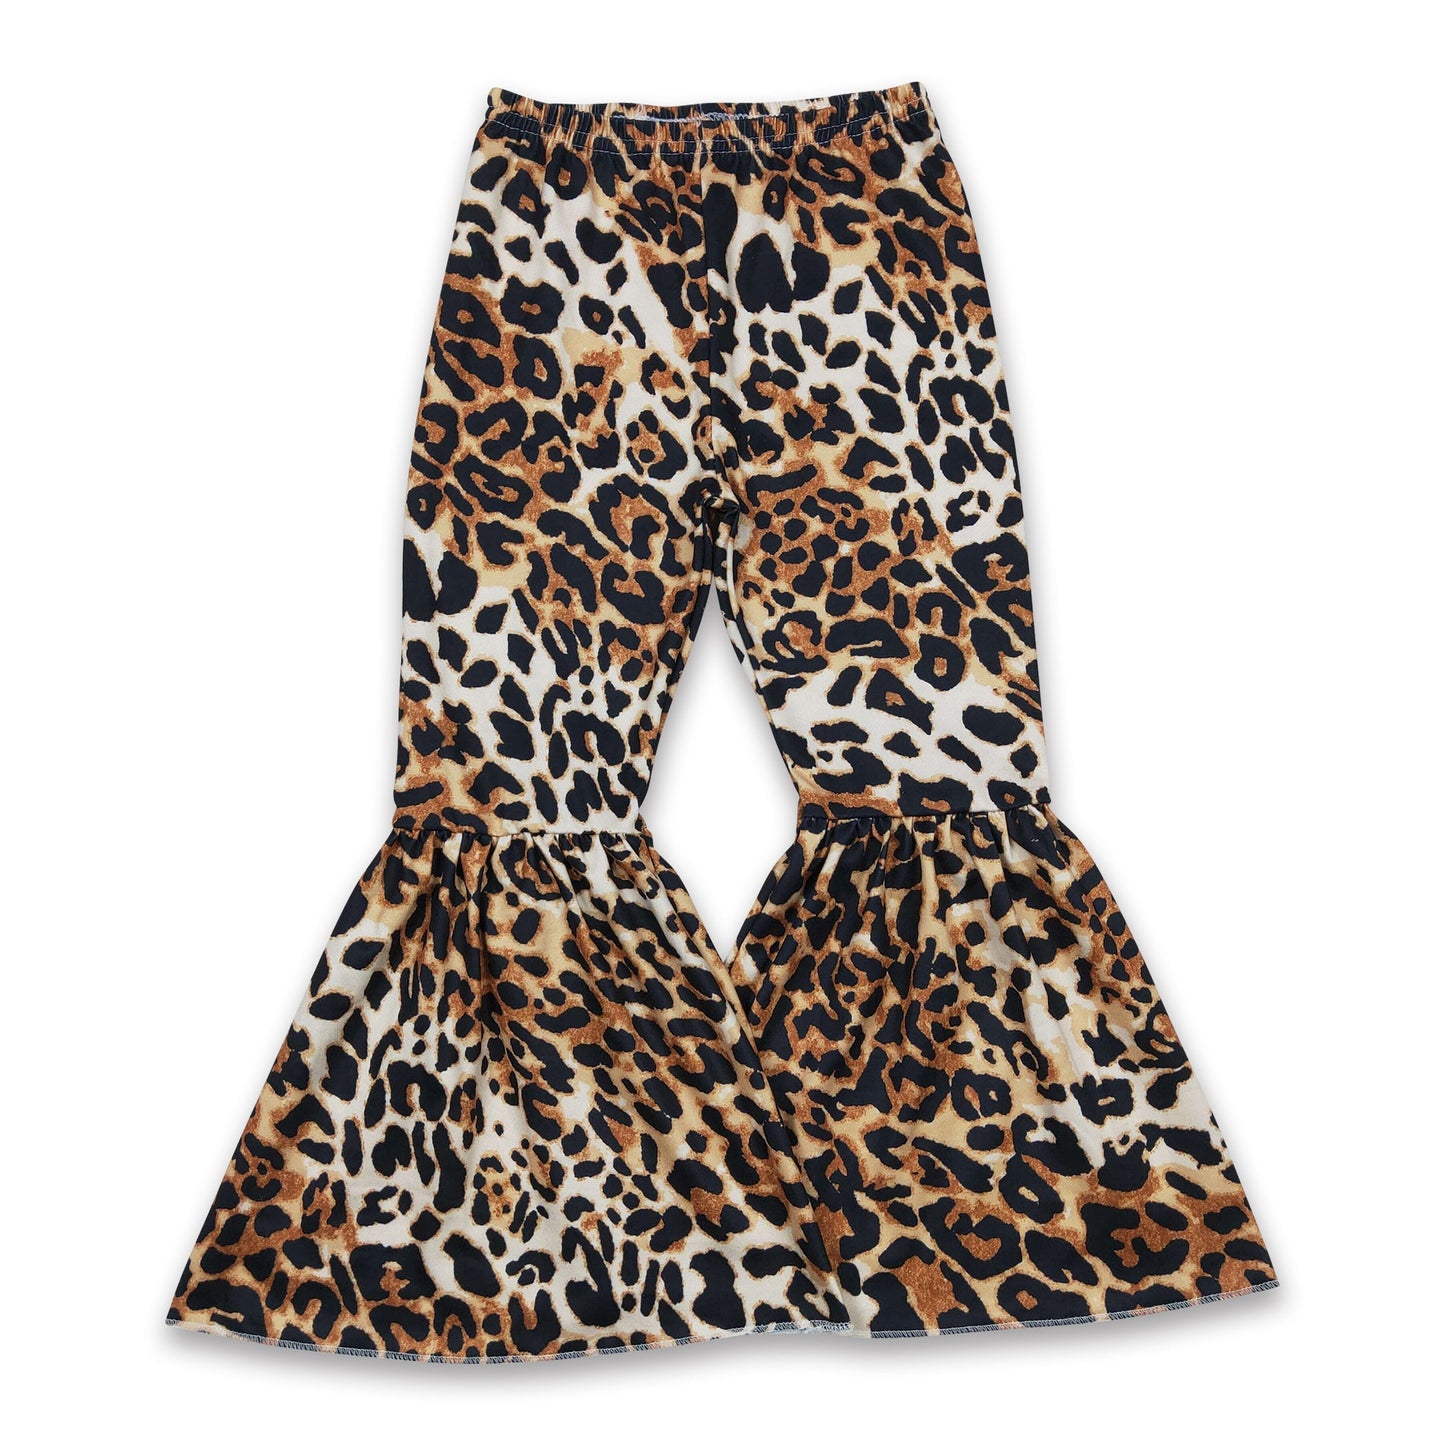 Leopard baby girls bell bottom pants